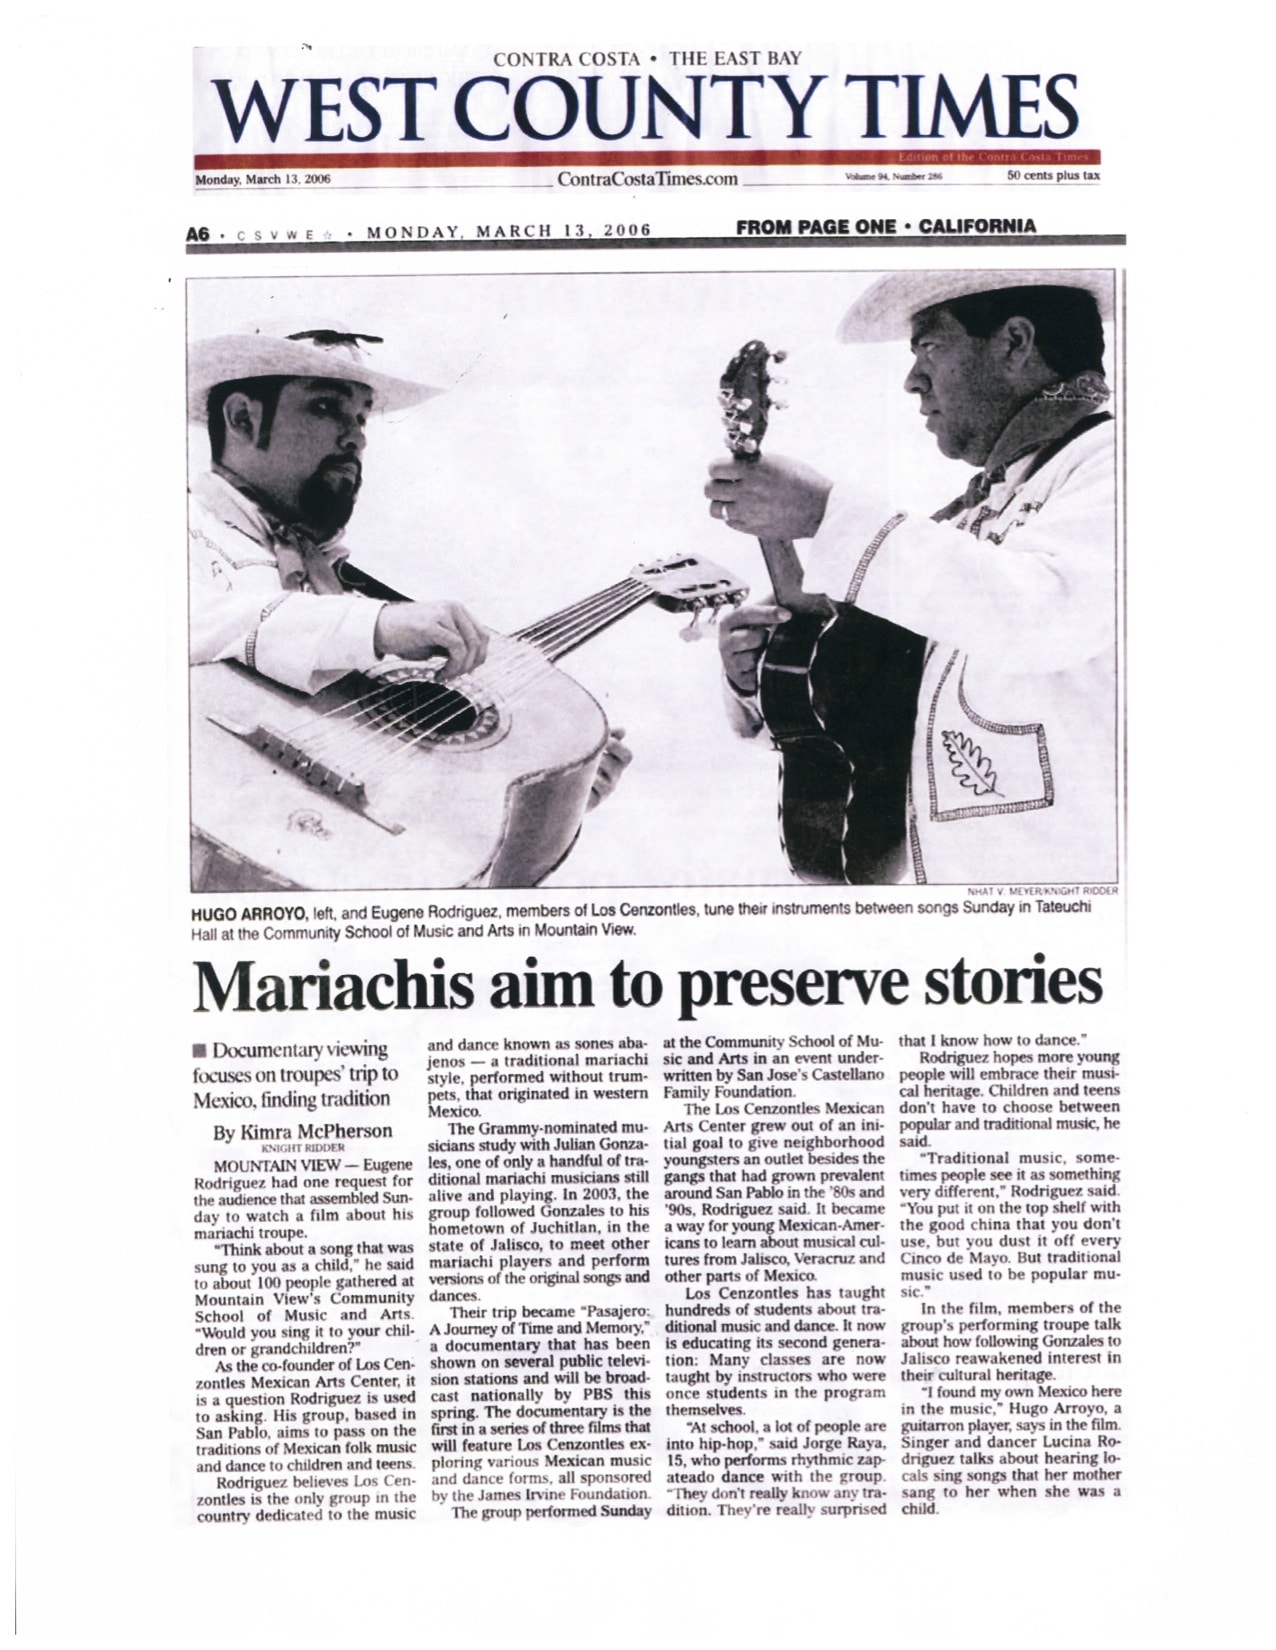 Mariachis buscan preservar historias